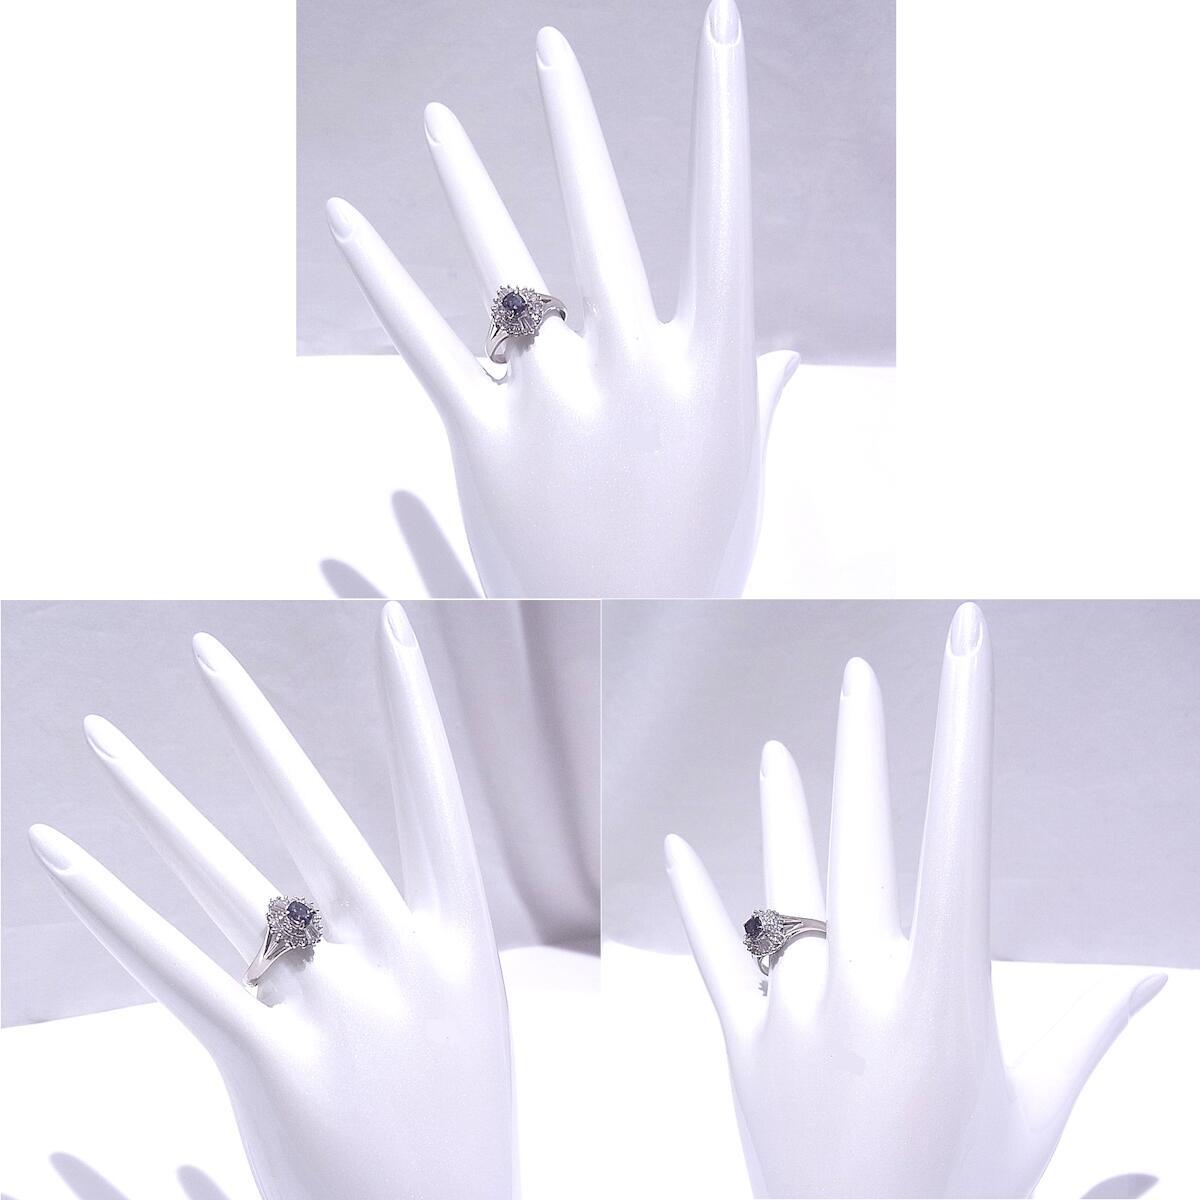 Pt900 platinum ring ring natural kliso beryl alexandrite diamond [ No-brand ][ used ][ degree A]